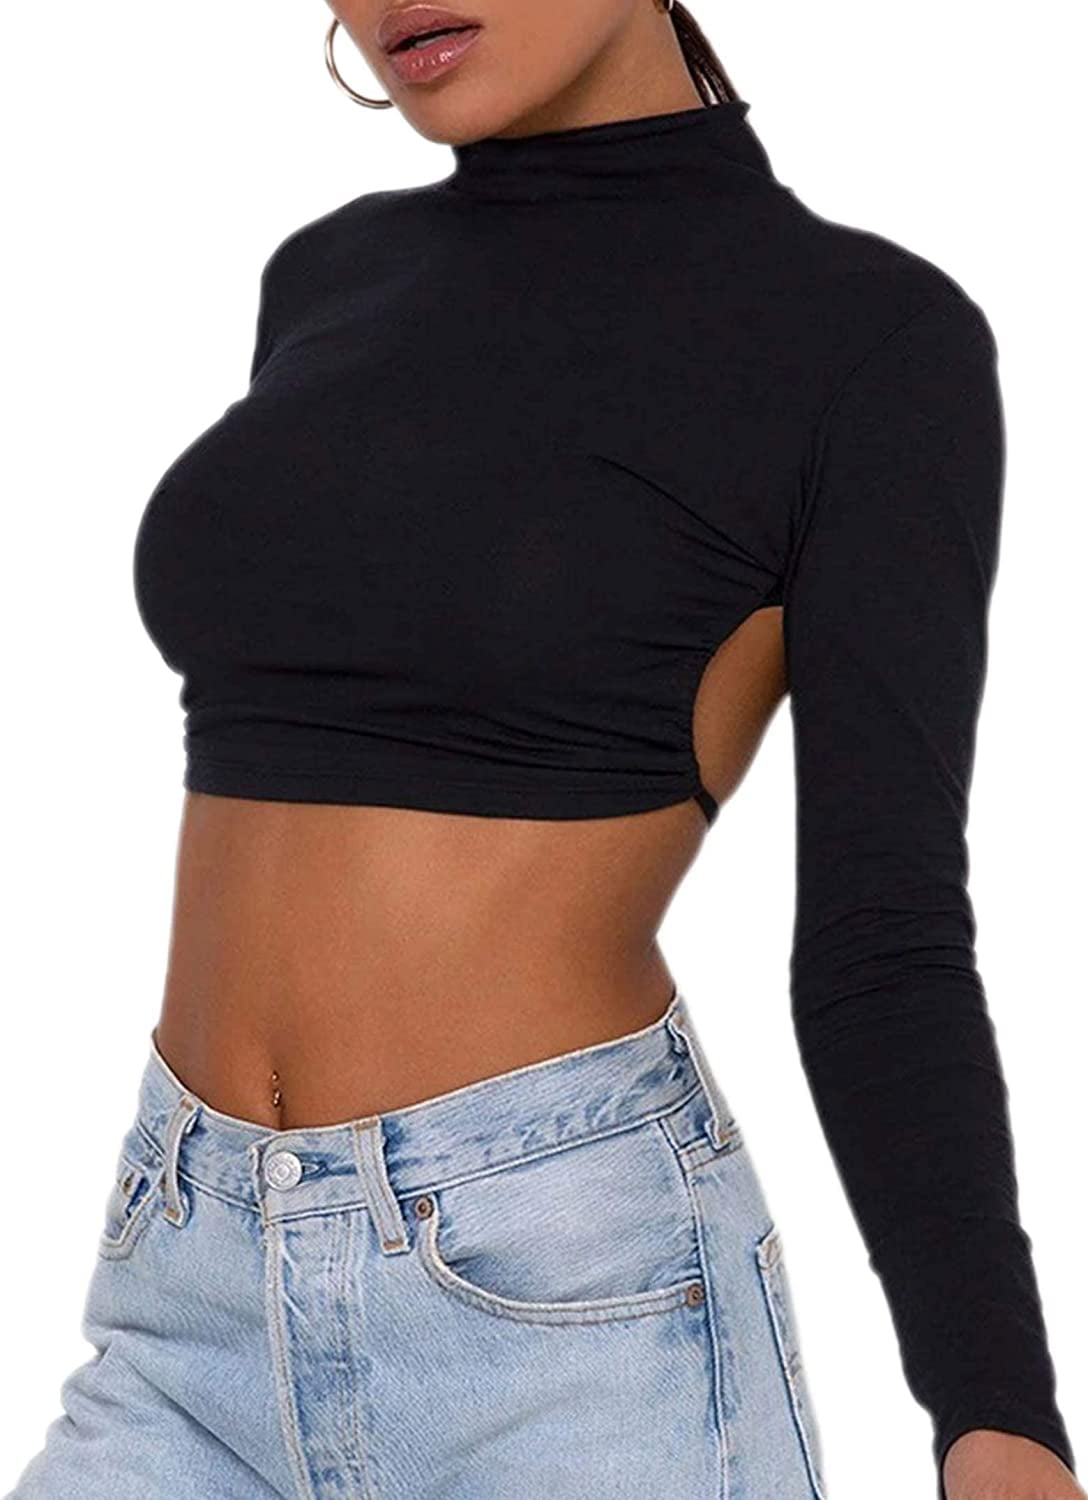 Roaso Women's Sexy Crop Top Cotton Backless T-shirt - Walmart.com